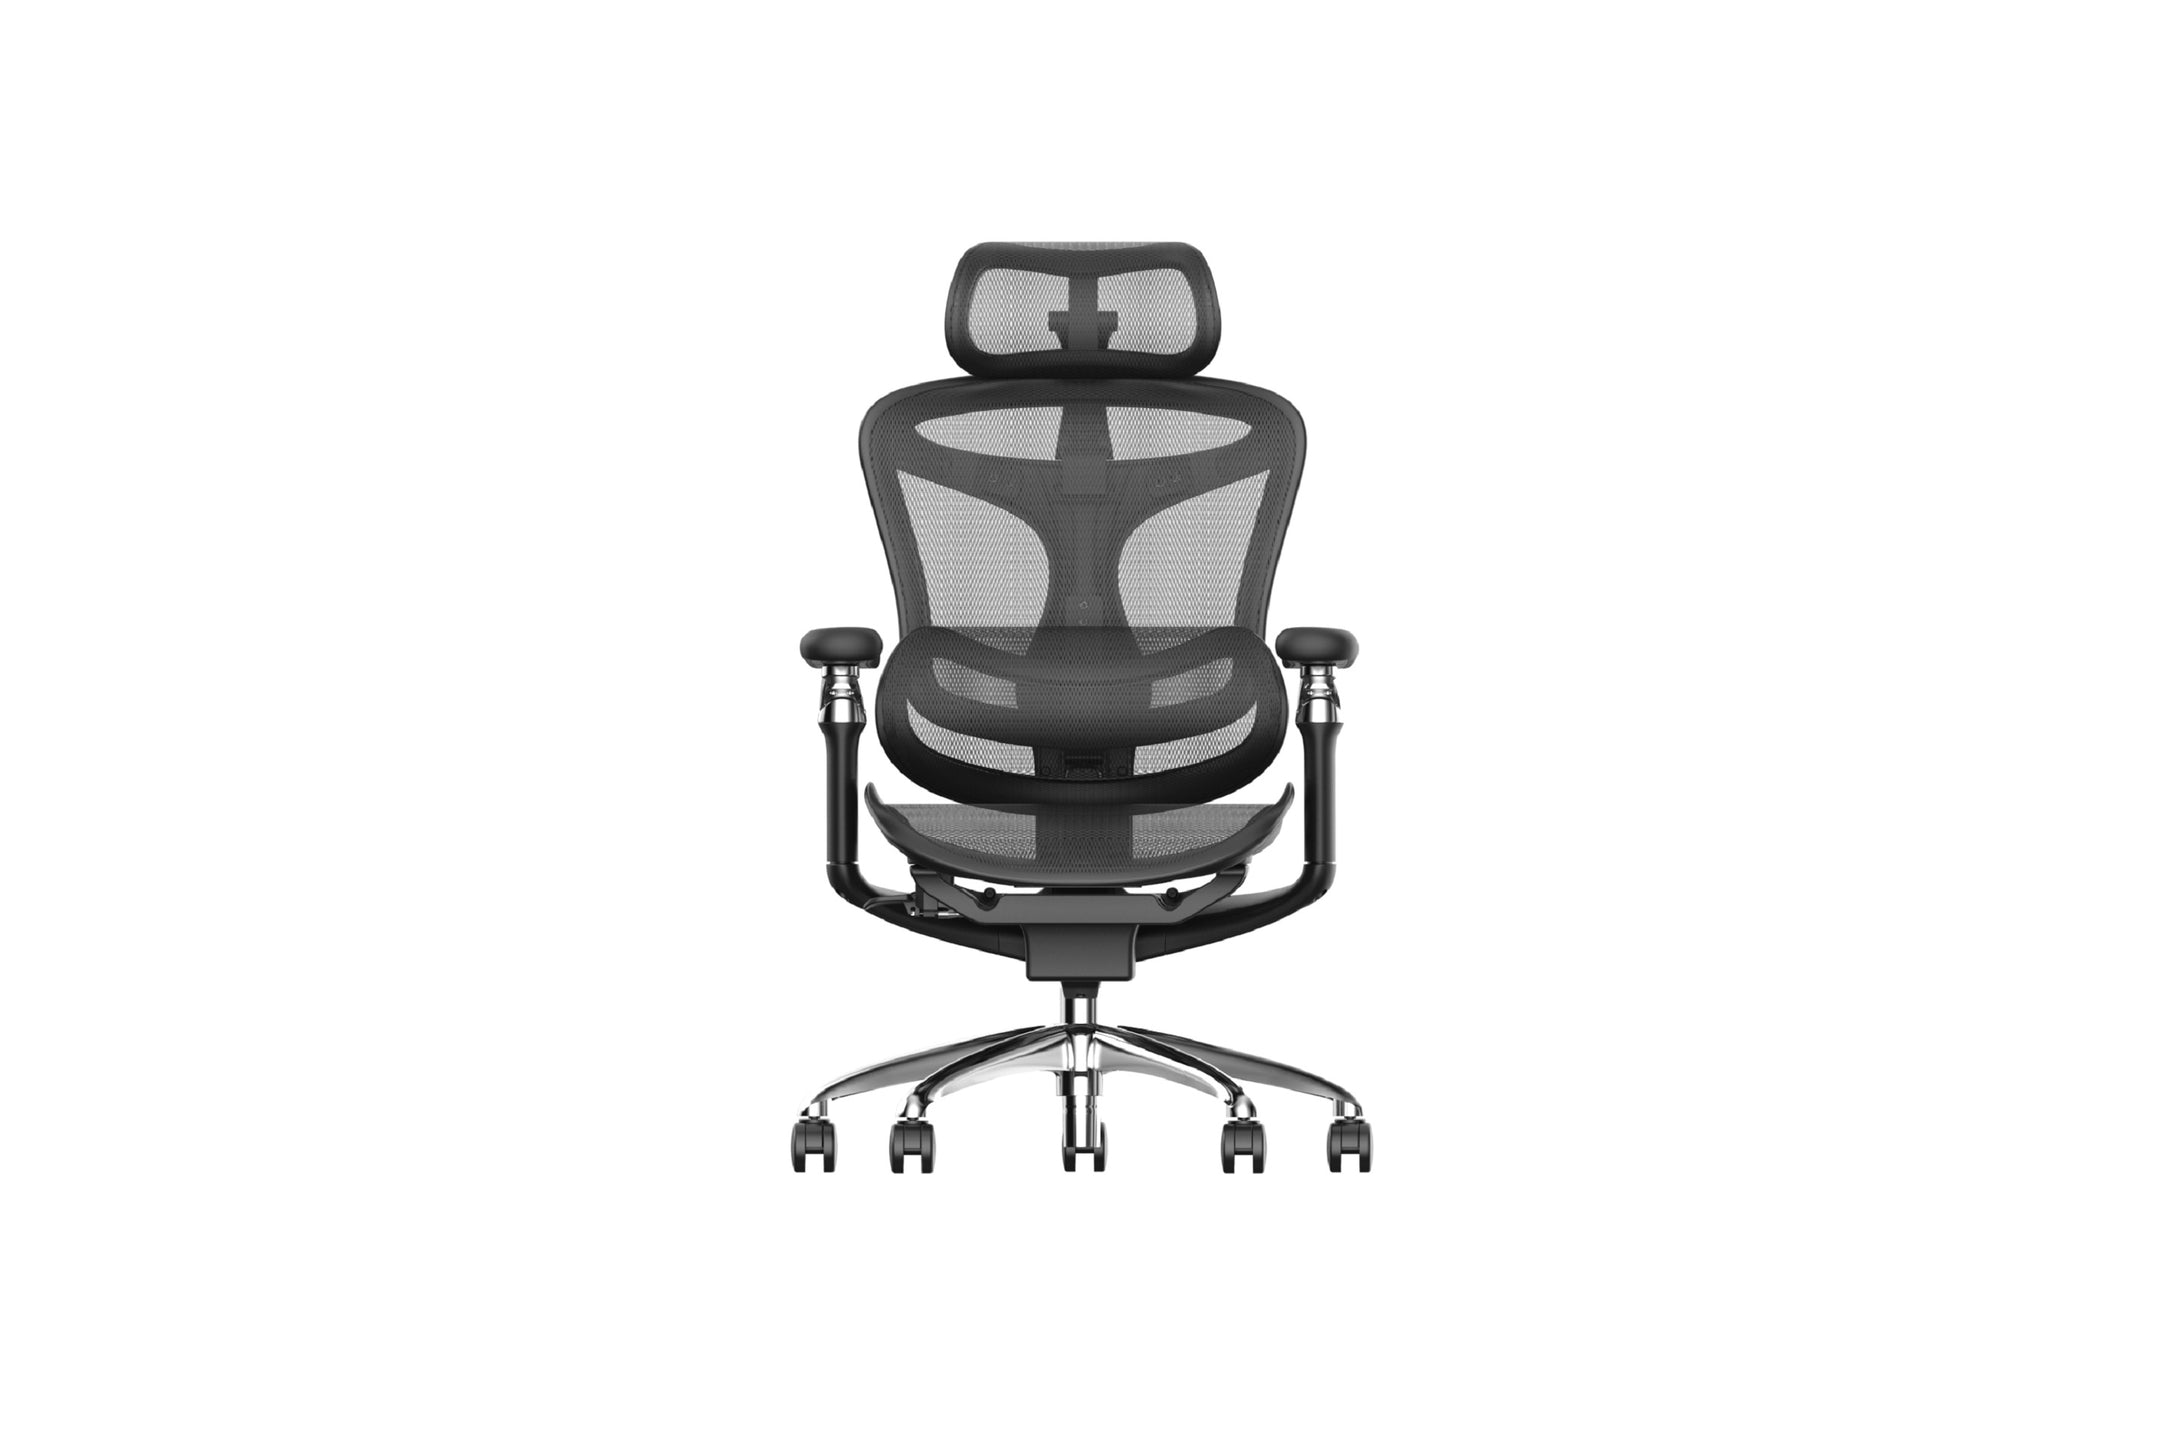 Sihoo A3 DORO-C300 Pro Ergonomic Office Chair